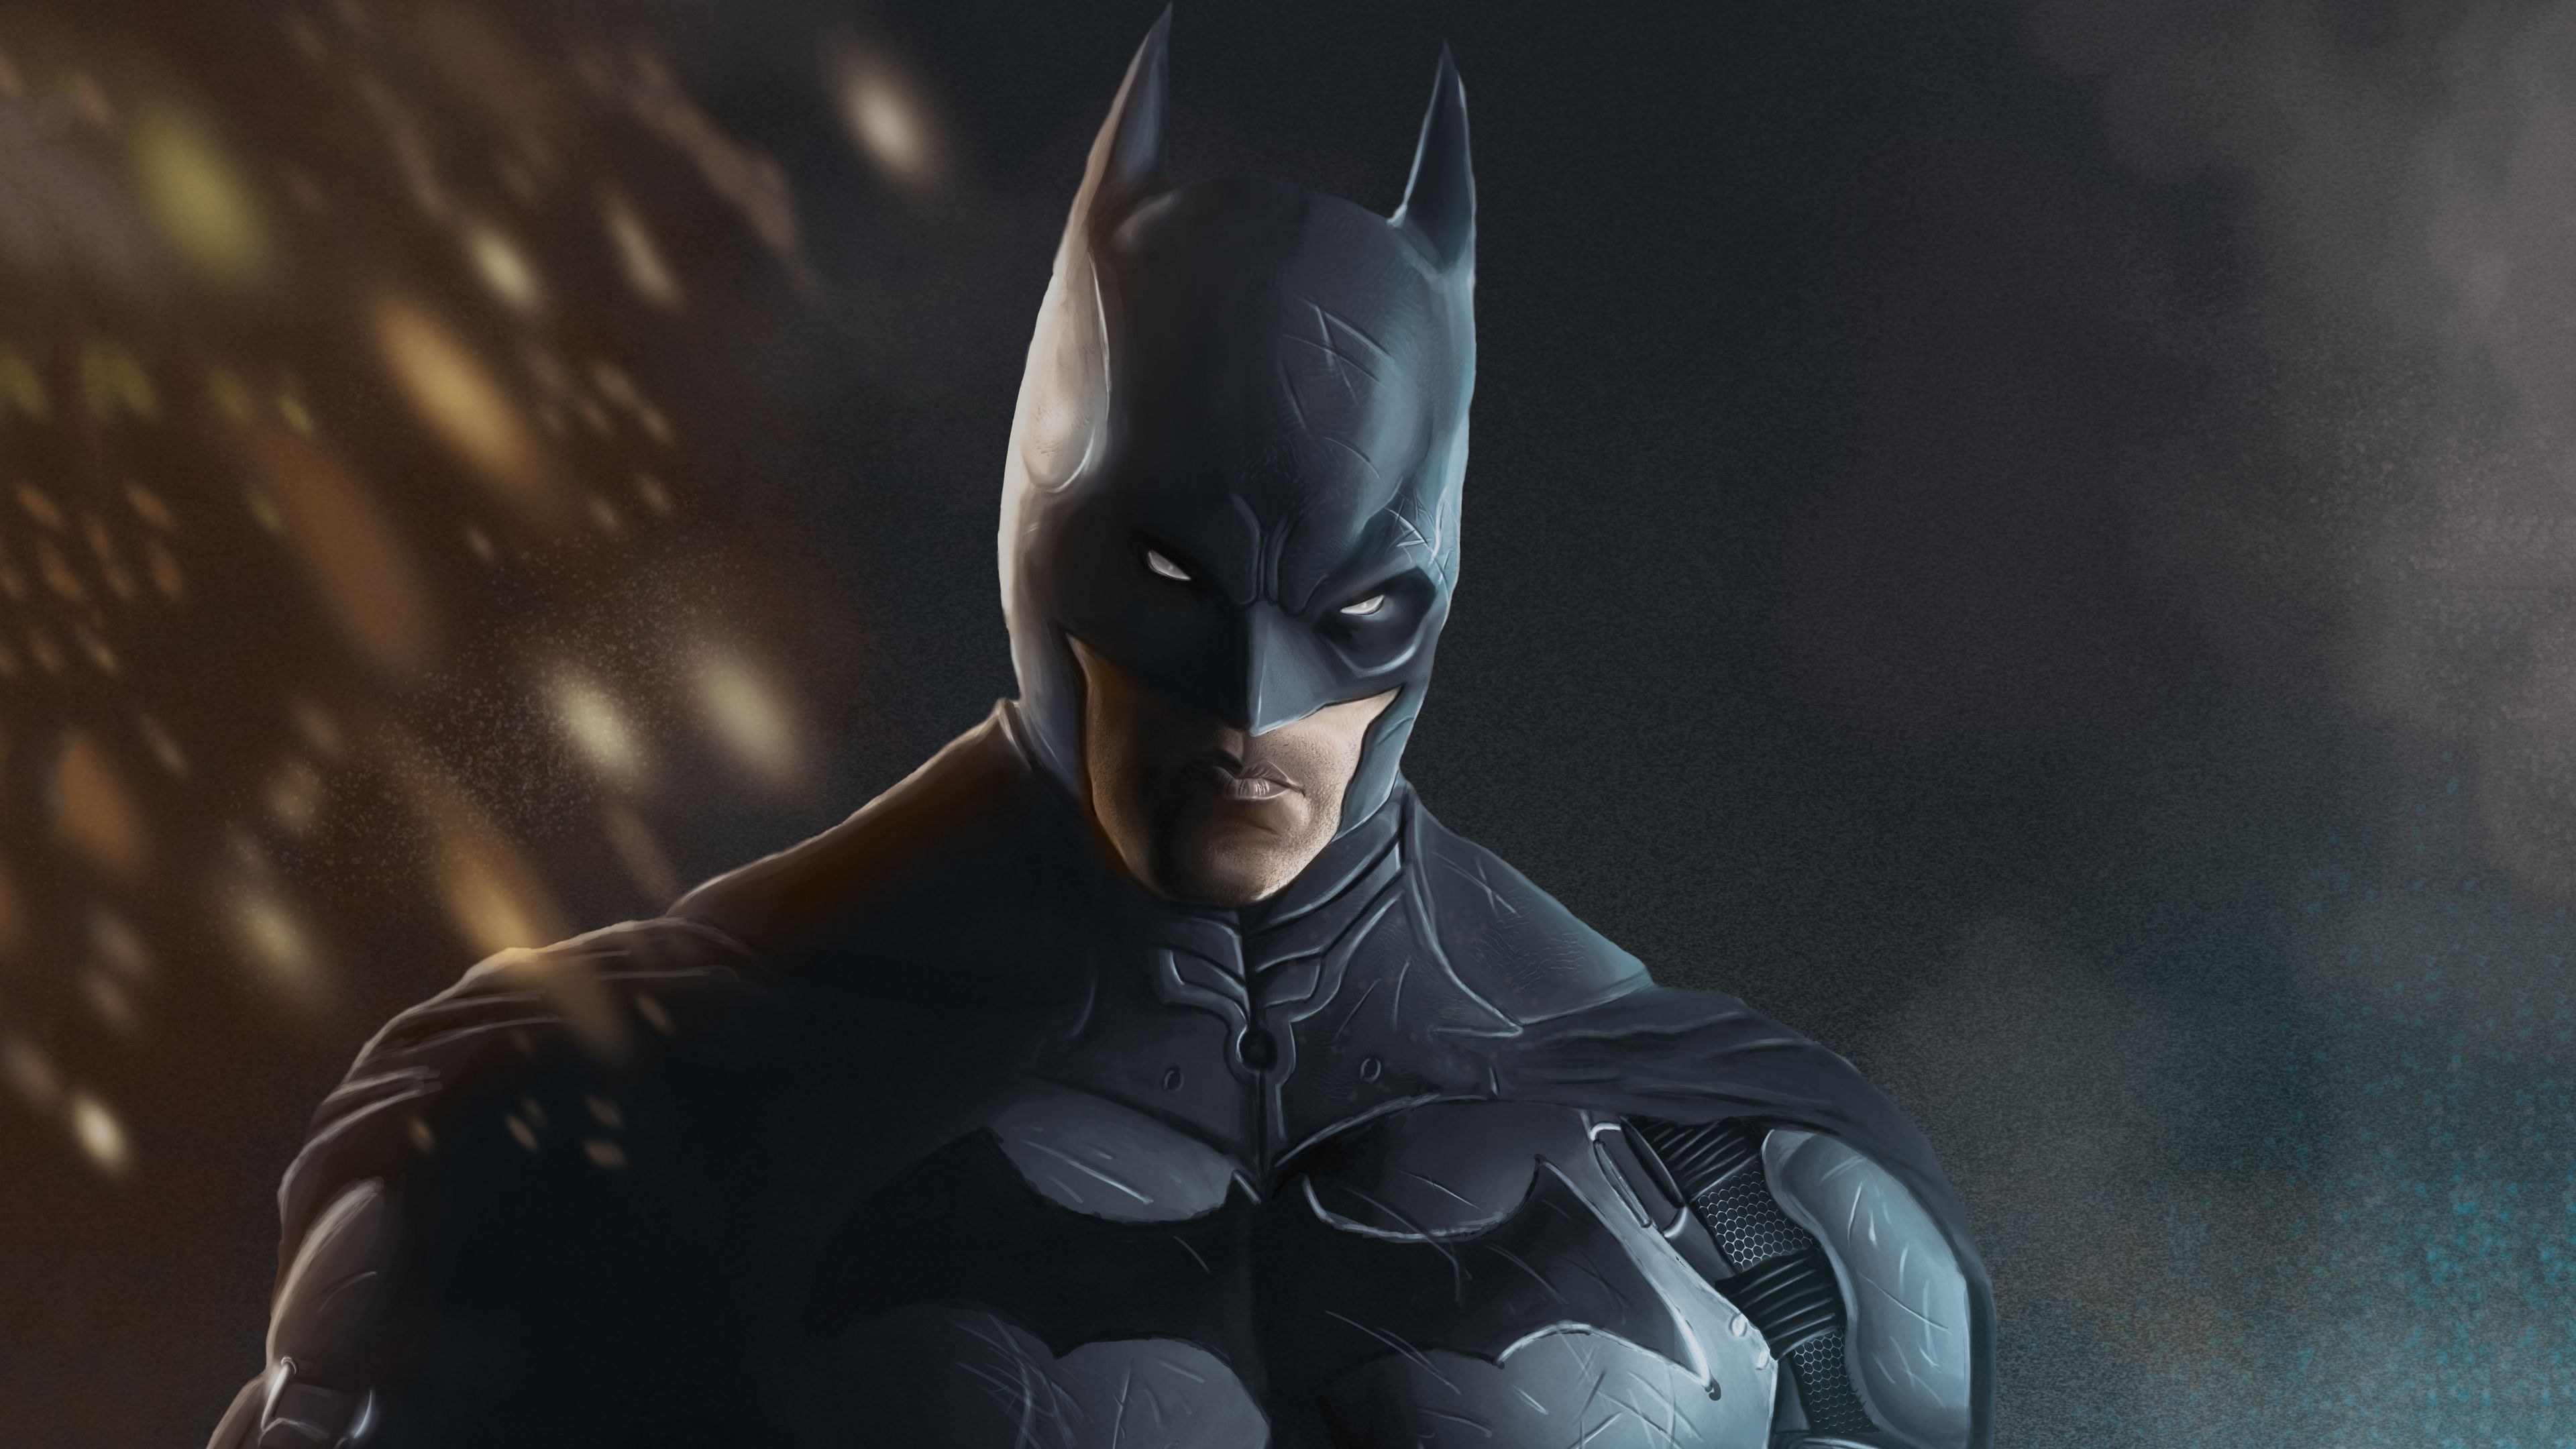 Batman Arkham Knight 5k Superheroes Wallpaper, Hd Wallpaper, Games Wallpaper, Batman Wallpaper, Batm. Batman Arkham Knight Wallpaper, Batman, Batman Wallpaper